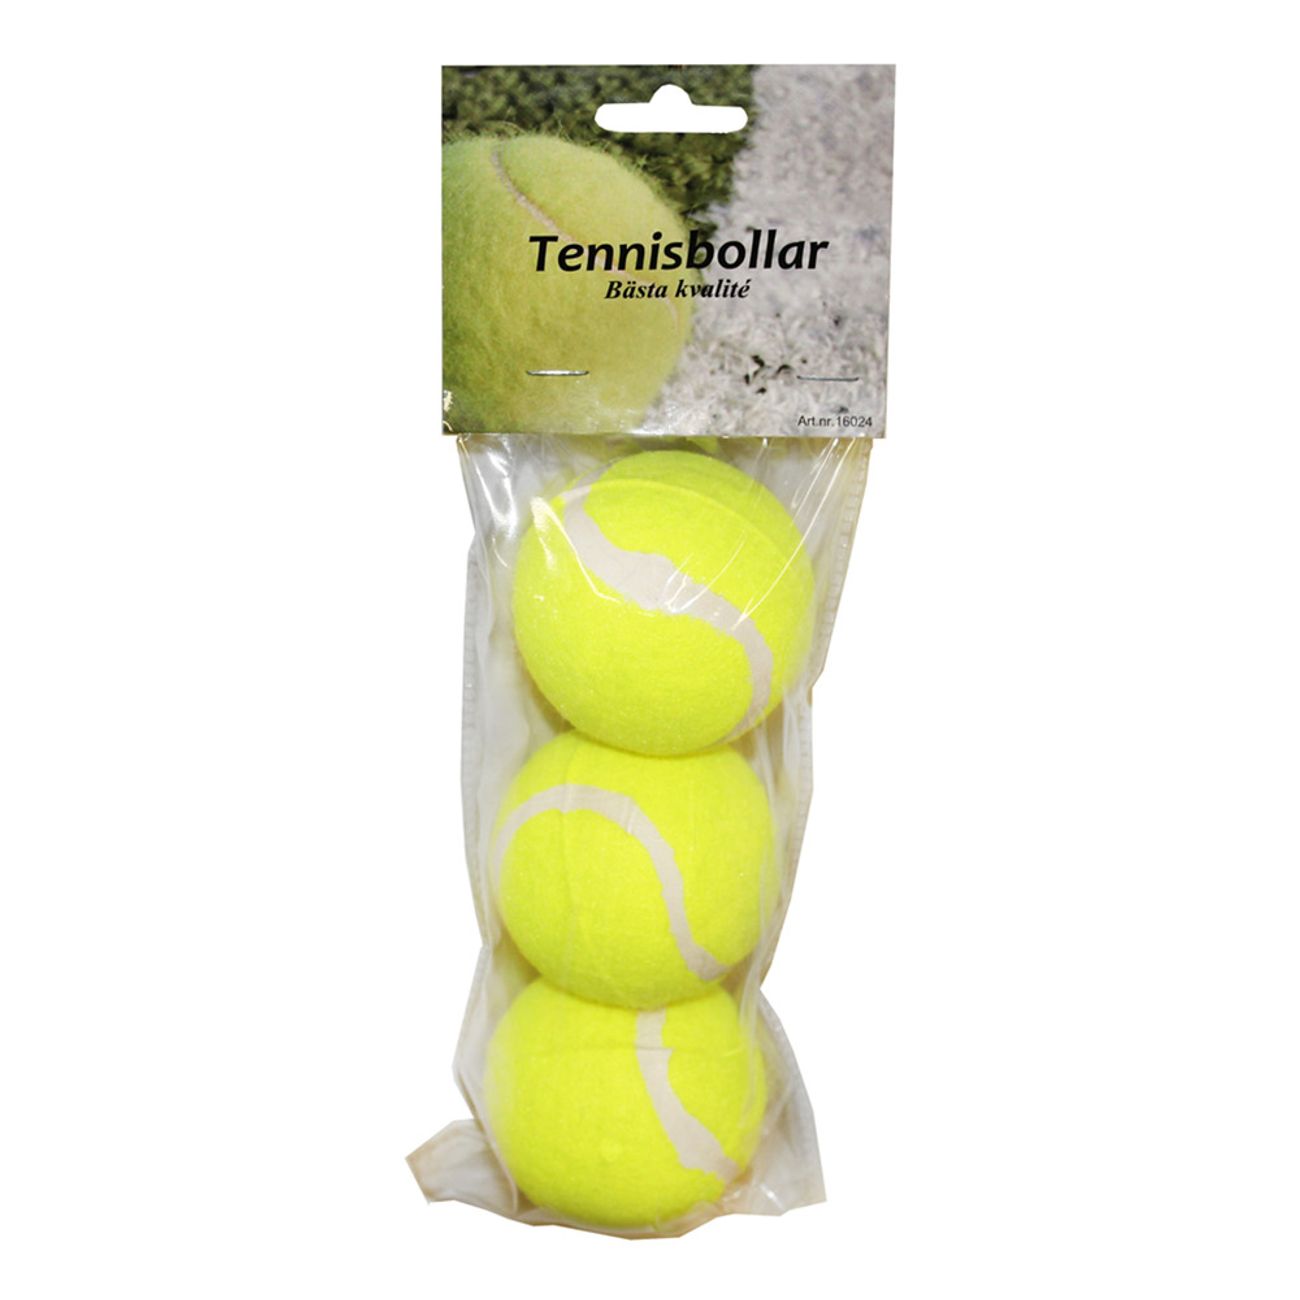 tennisbollar-74501-1